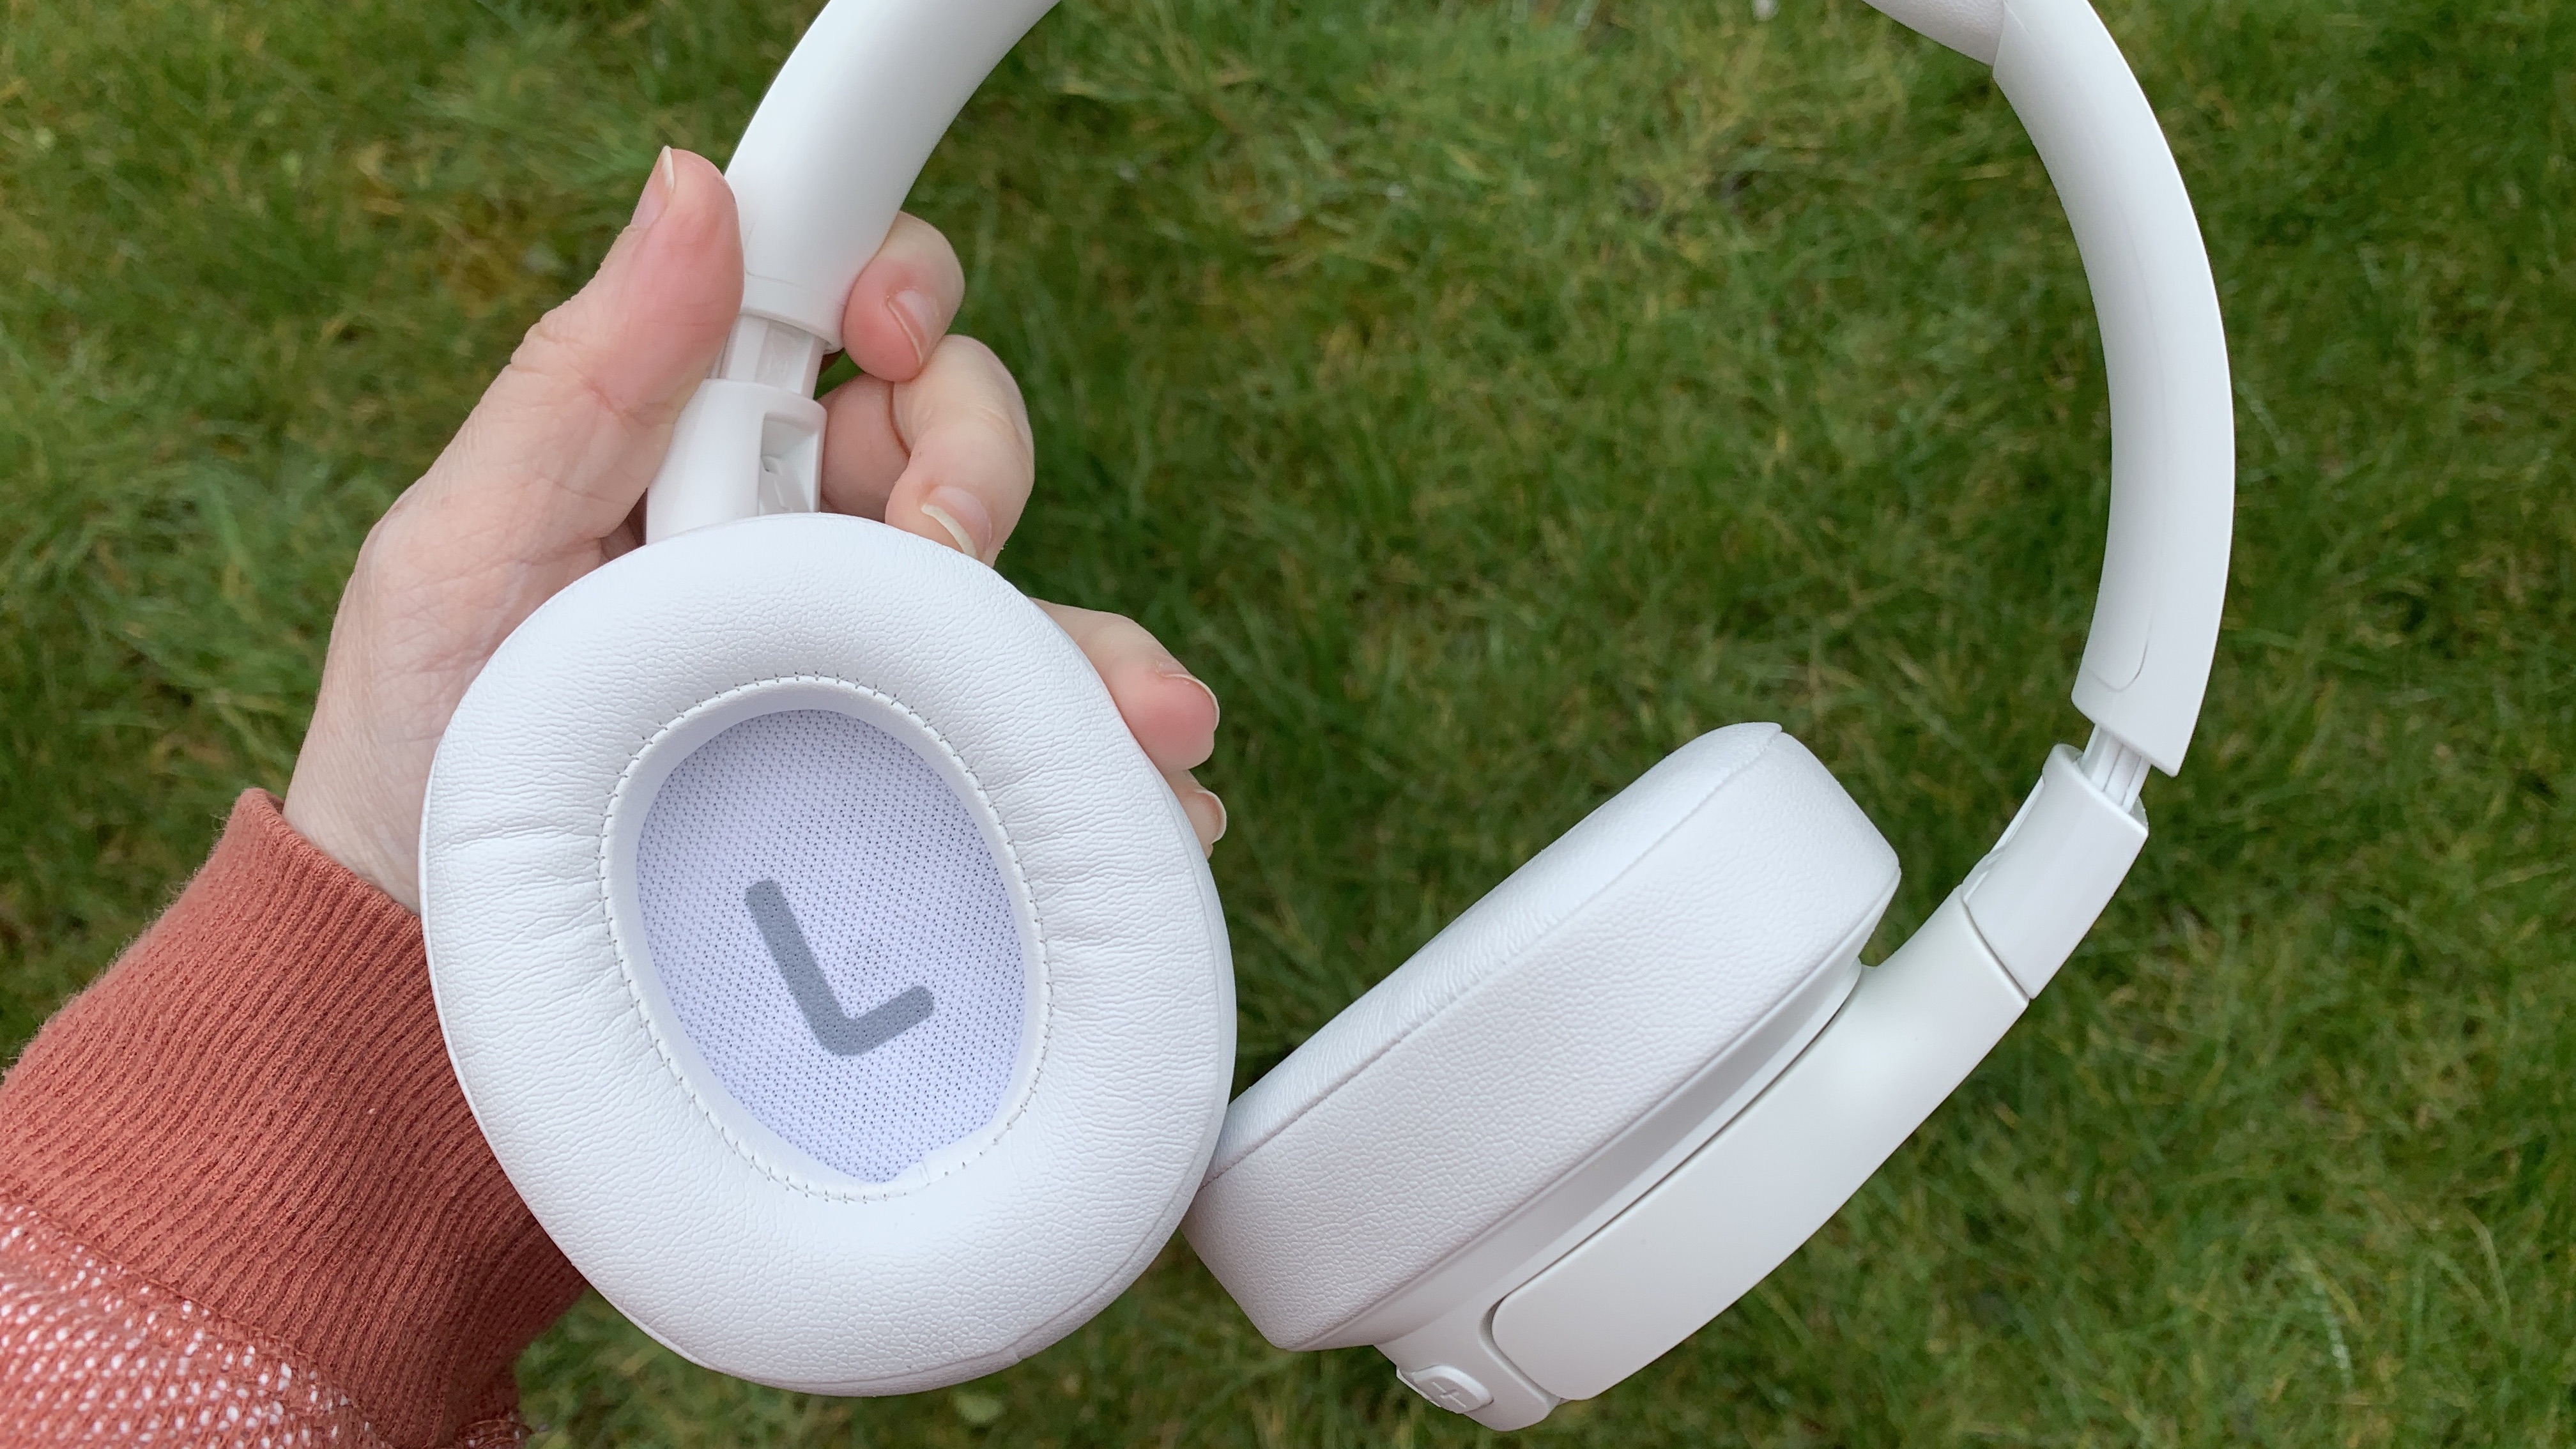 Tampilan dekat bagian dalam cangkir headphone over-ear jbl tune 750btnc berwarna putih dengan latar belakang rumput